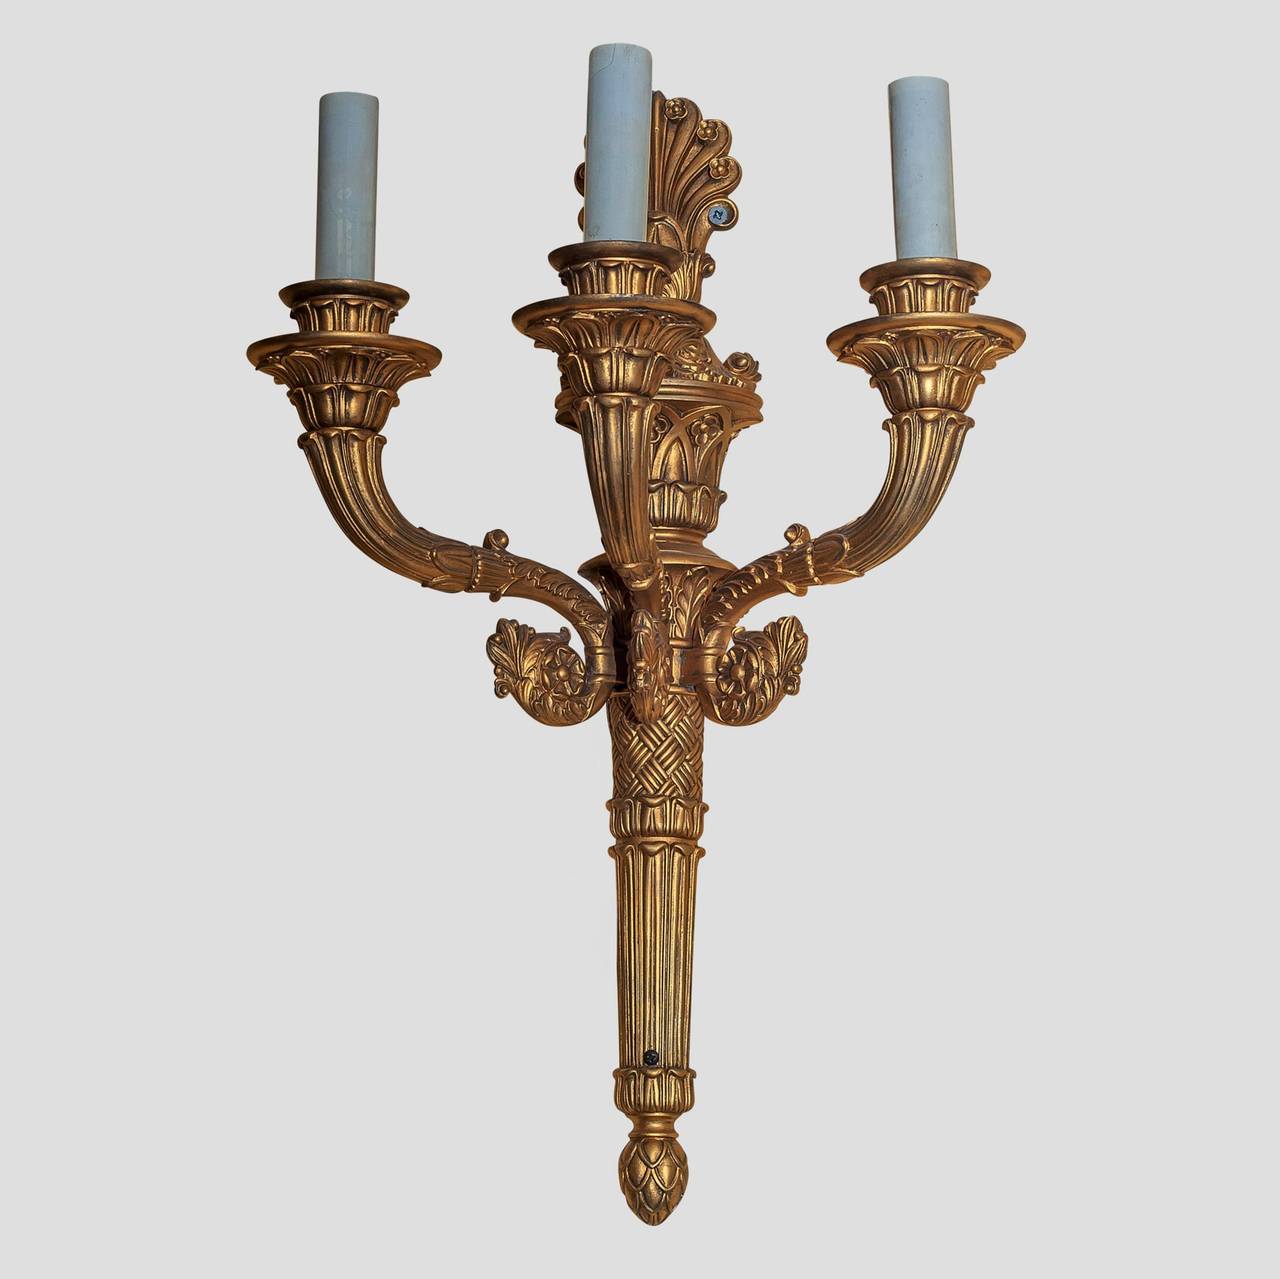 Pair of Louis XVI Style Gilt Bronze Three-Light Wall Light Sconces
Stock Number: L284